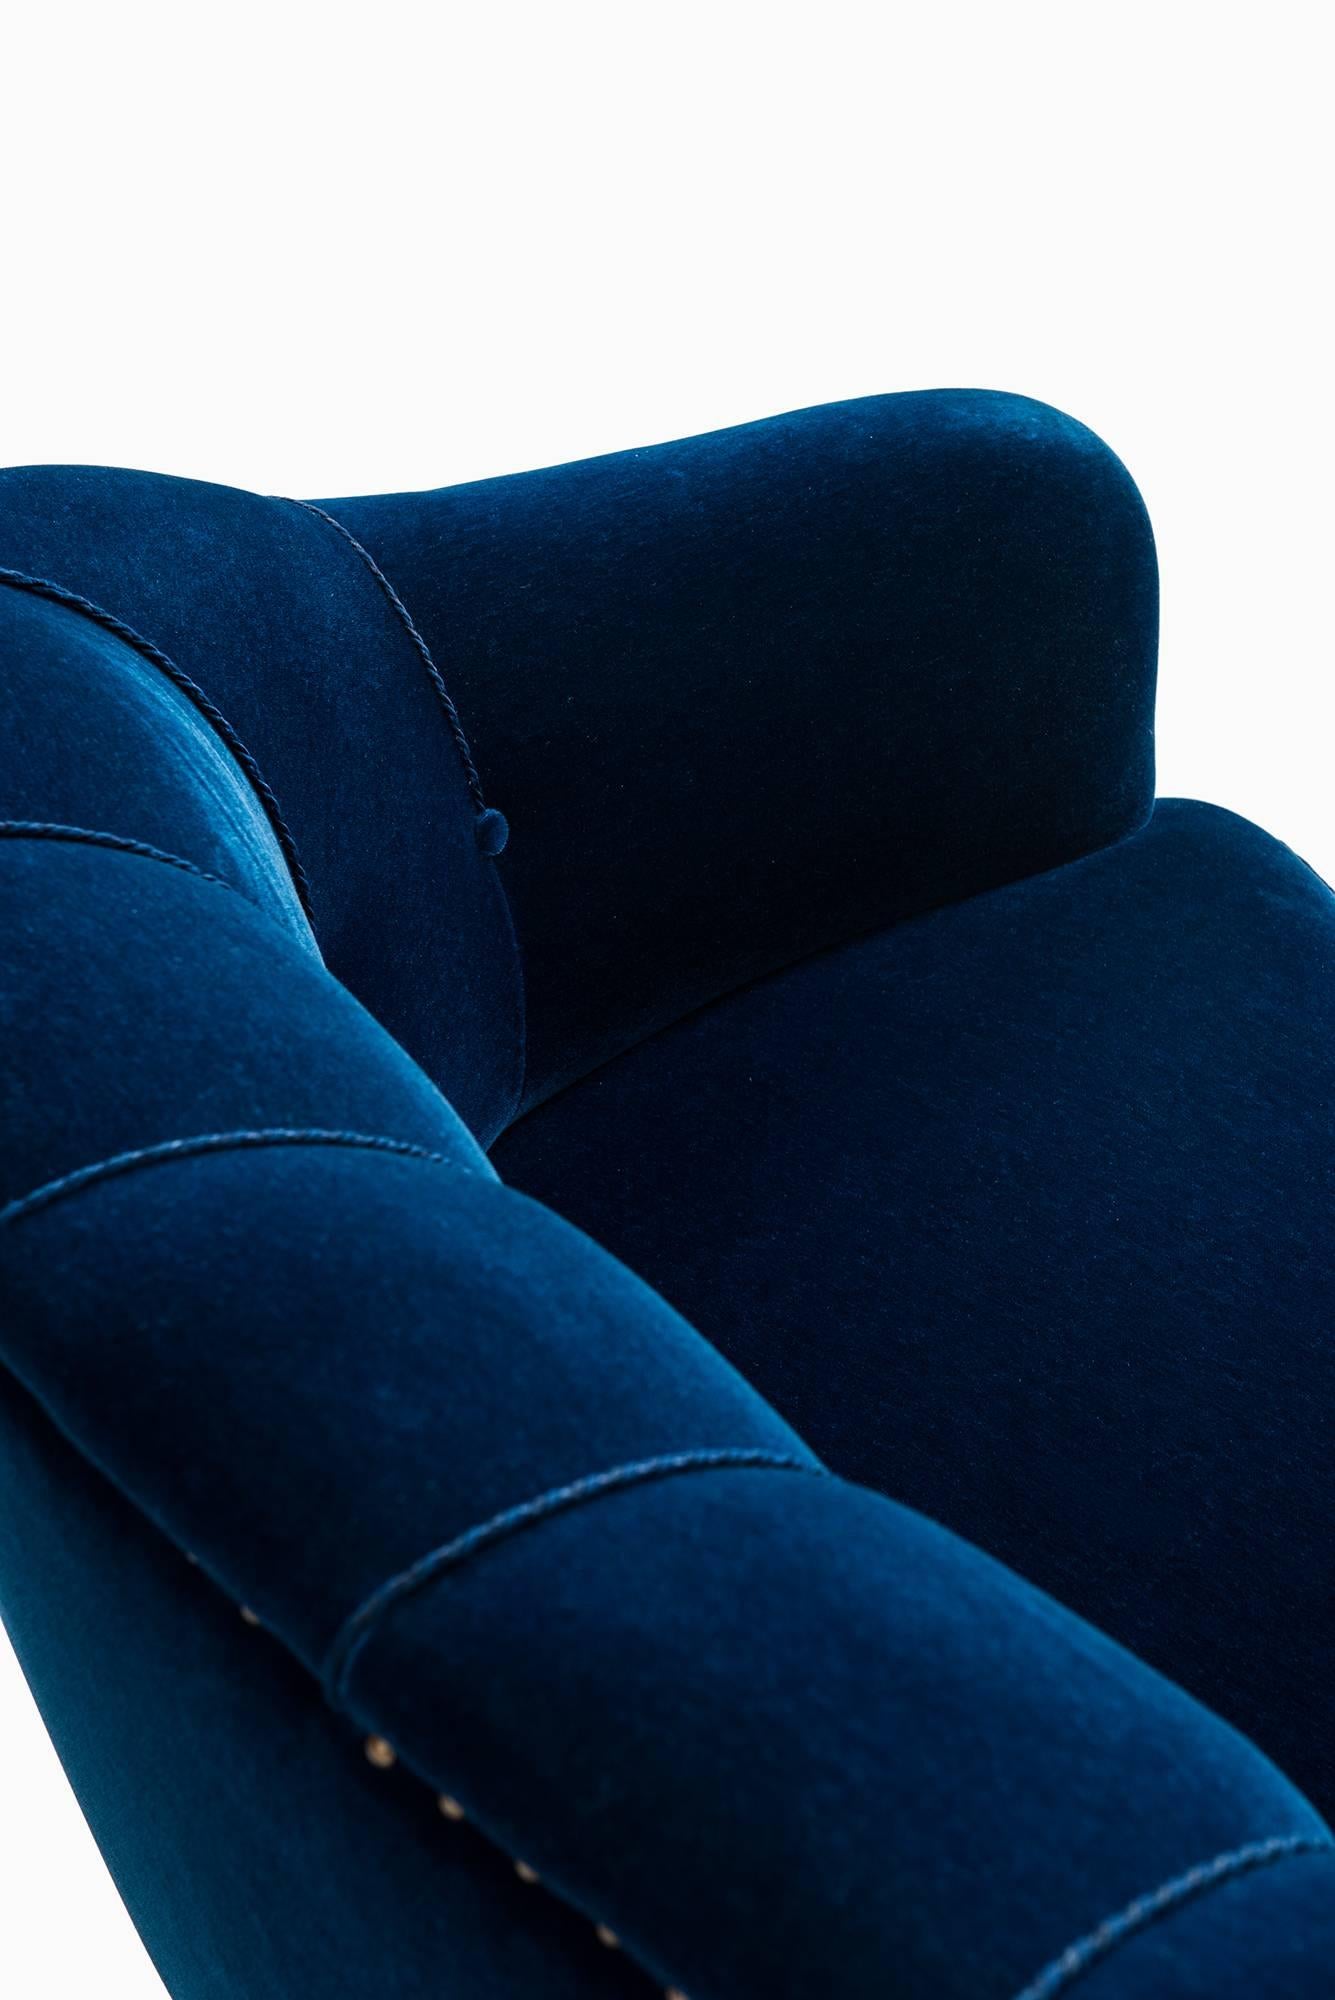 curved blue sofa